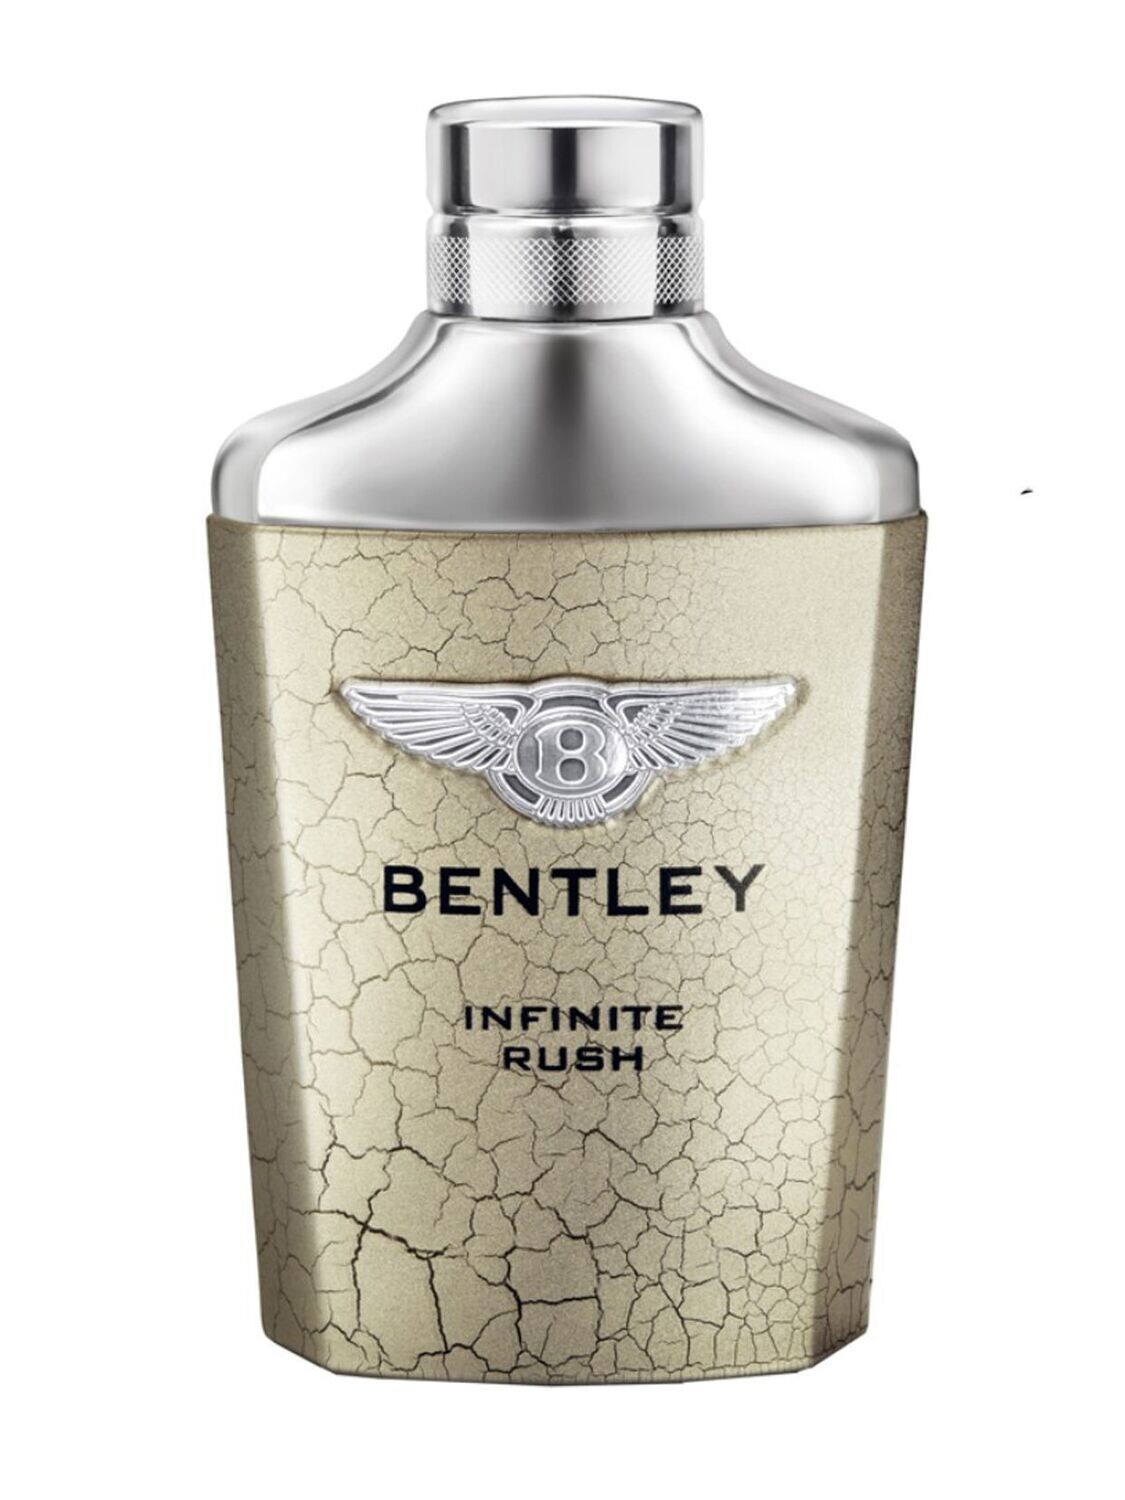 Bentley Infinite Rush Eau de Toilette 100ml